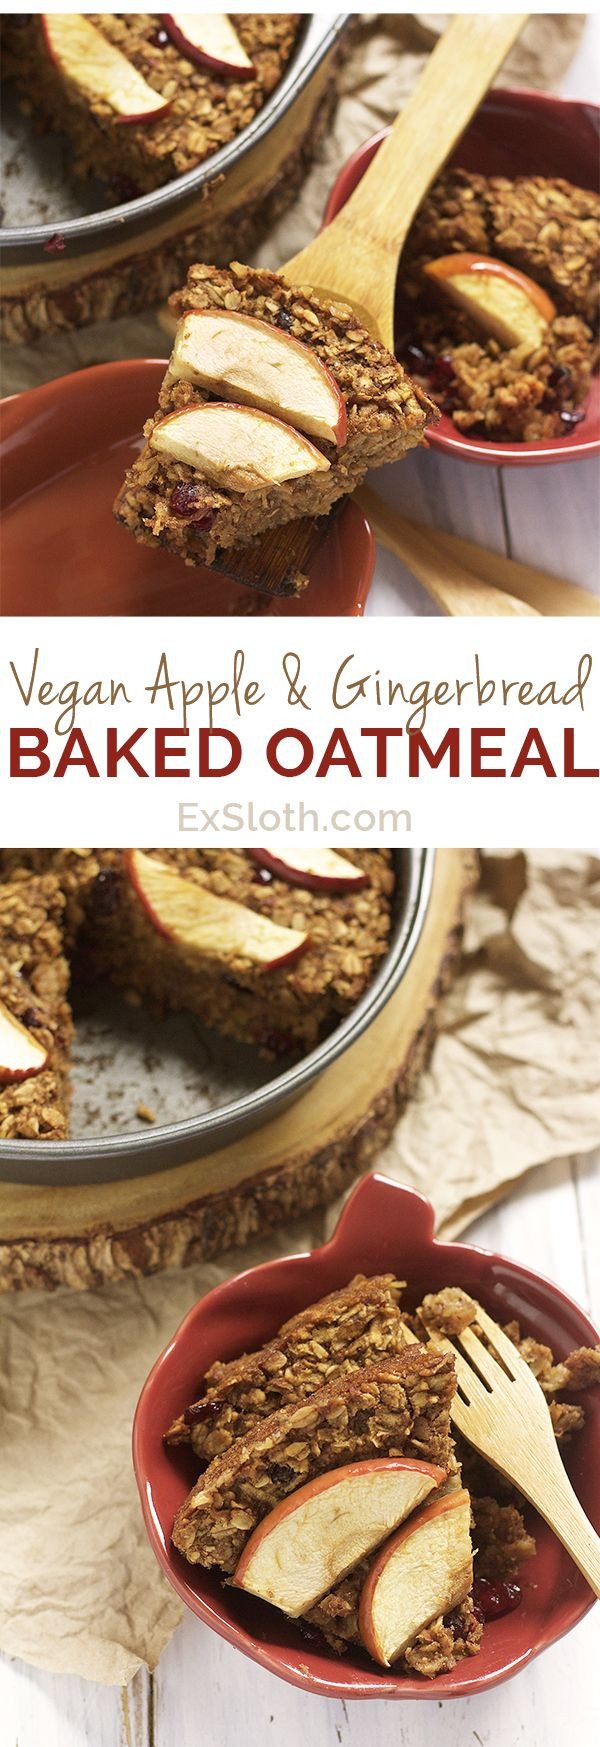 Vegan Baked Oatmeal Recipes
 Vegan Gingerbread Baked Oatmeal Recipe